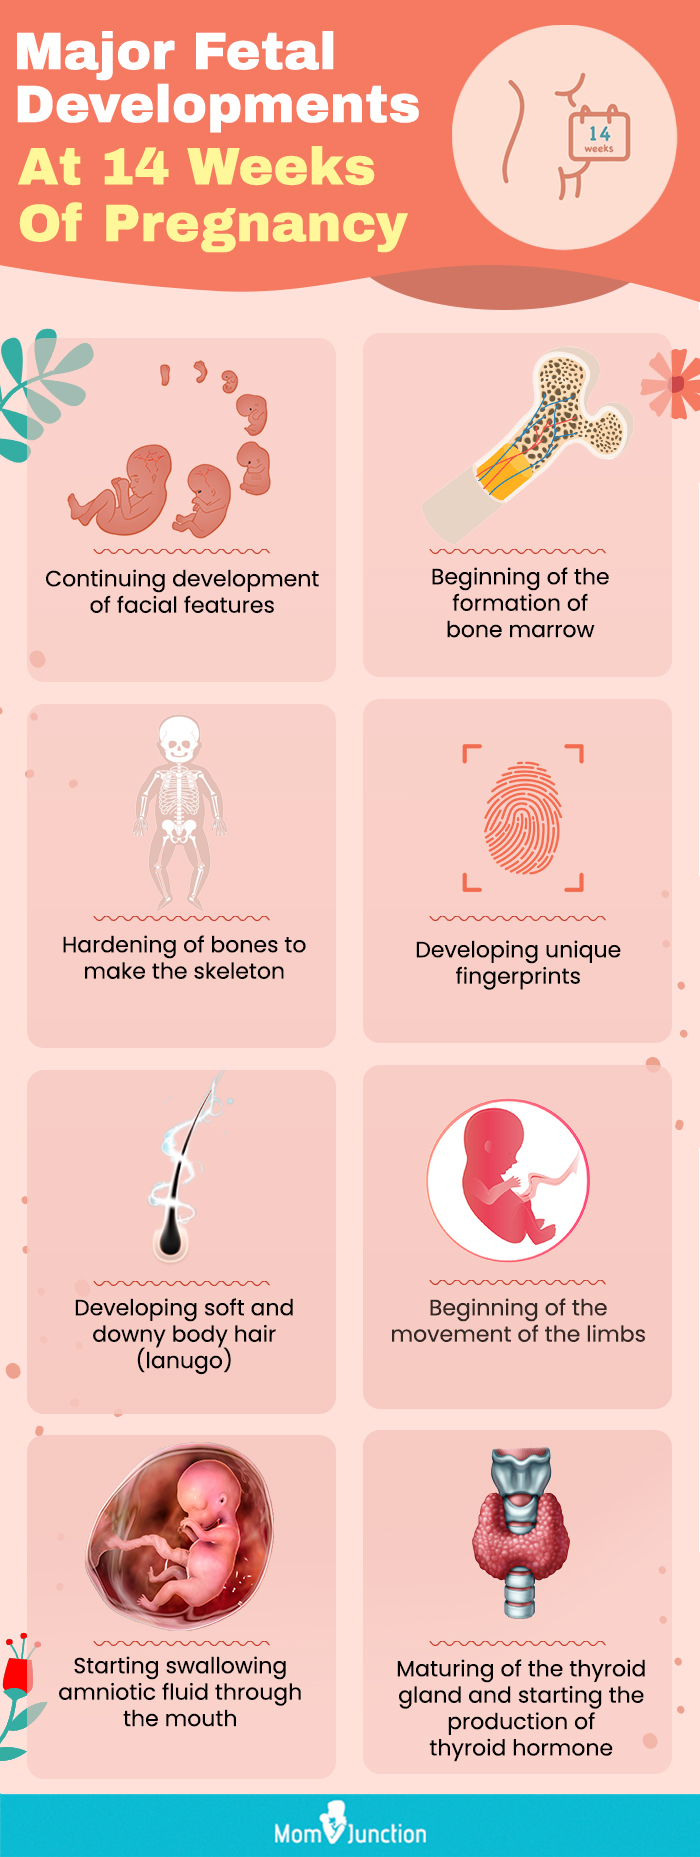 major fetal developments at 14 weeks of pregnancy (infographic)